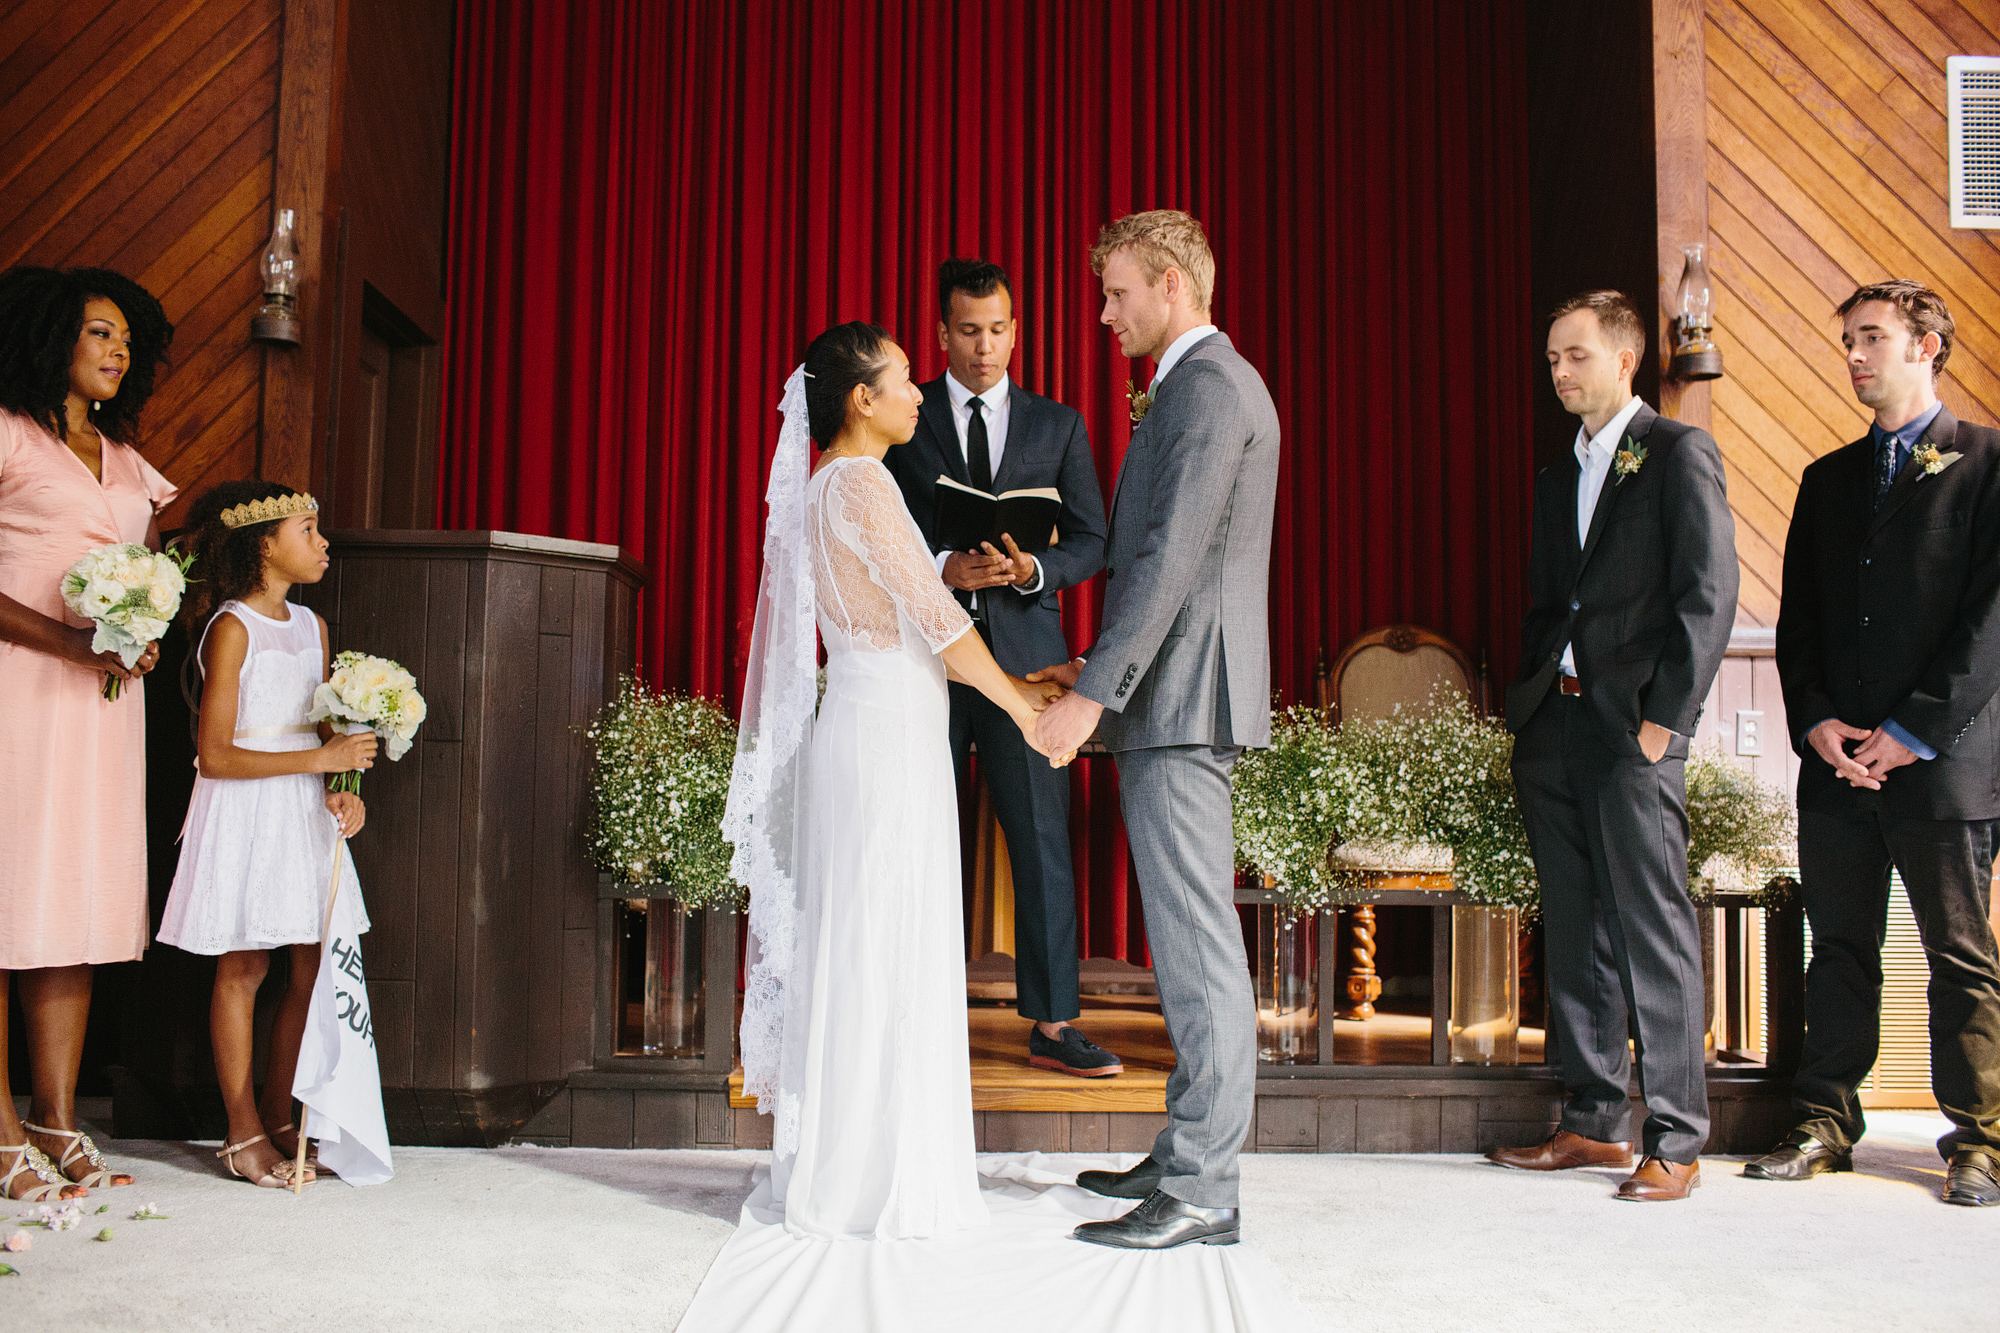 Lydia and Brody's wedding ceremony. 